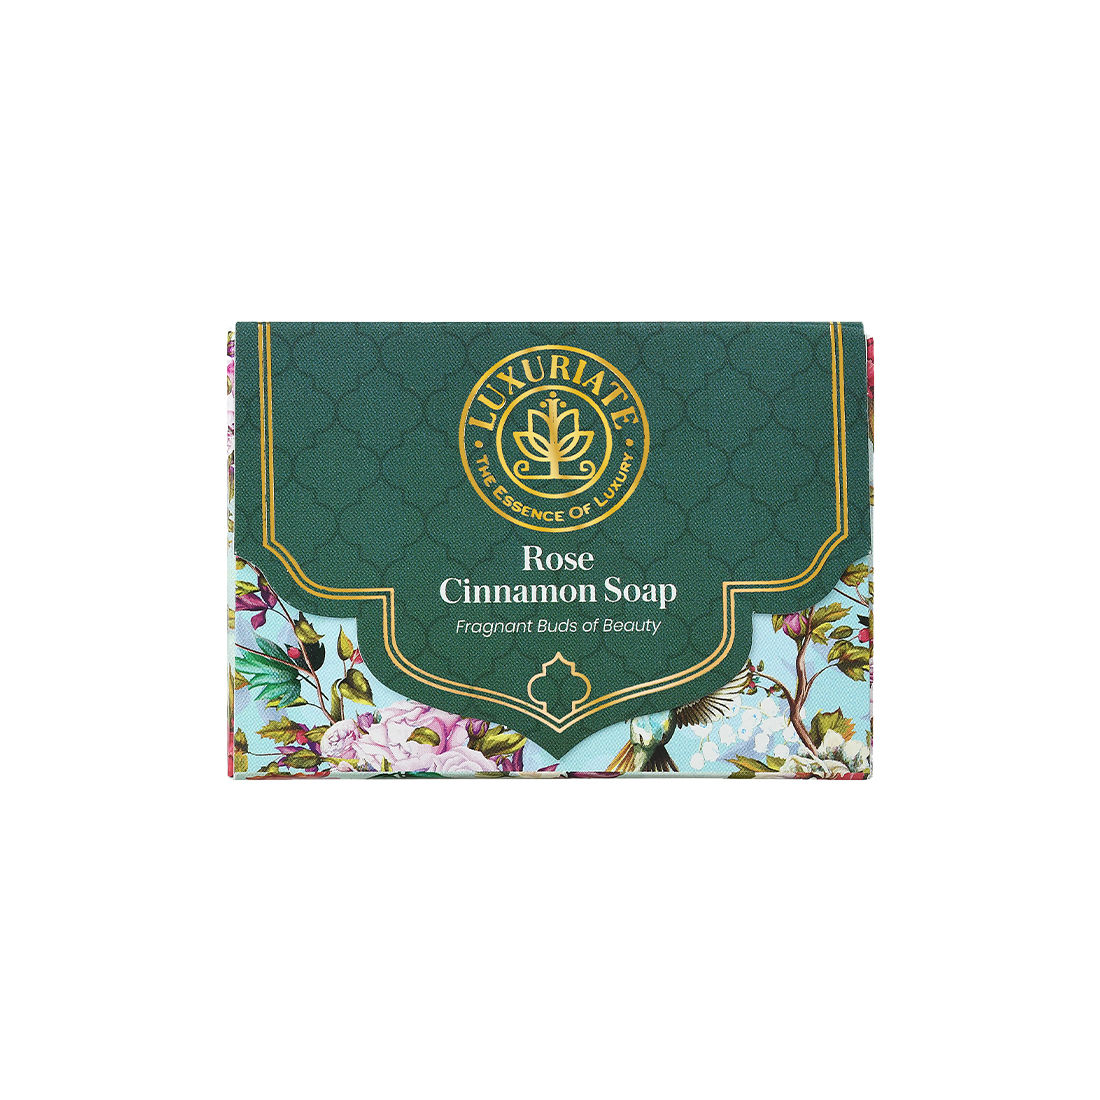 LUXURIATE Rose Cinnamon Fragrant Buds of Beauty Soap Bar